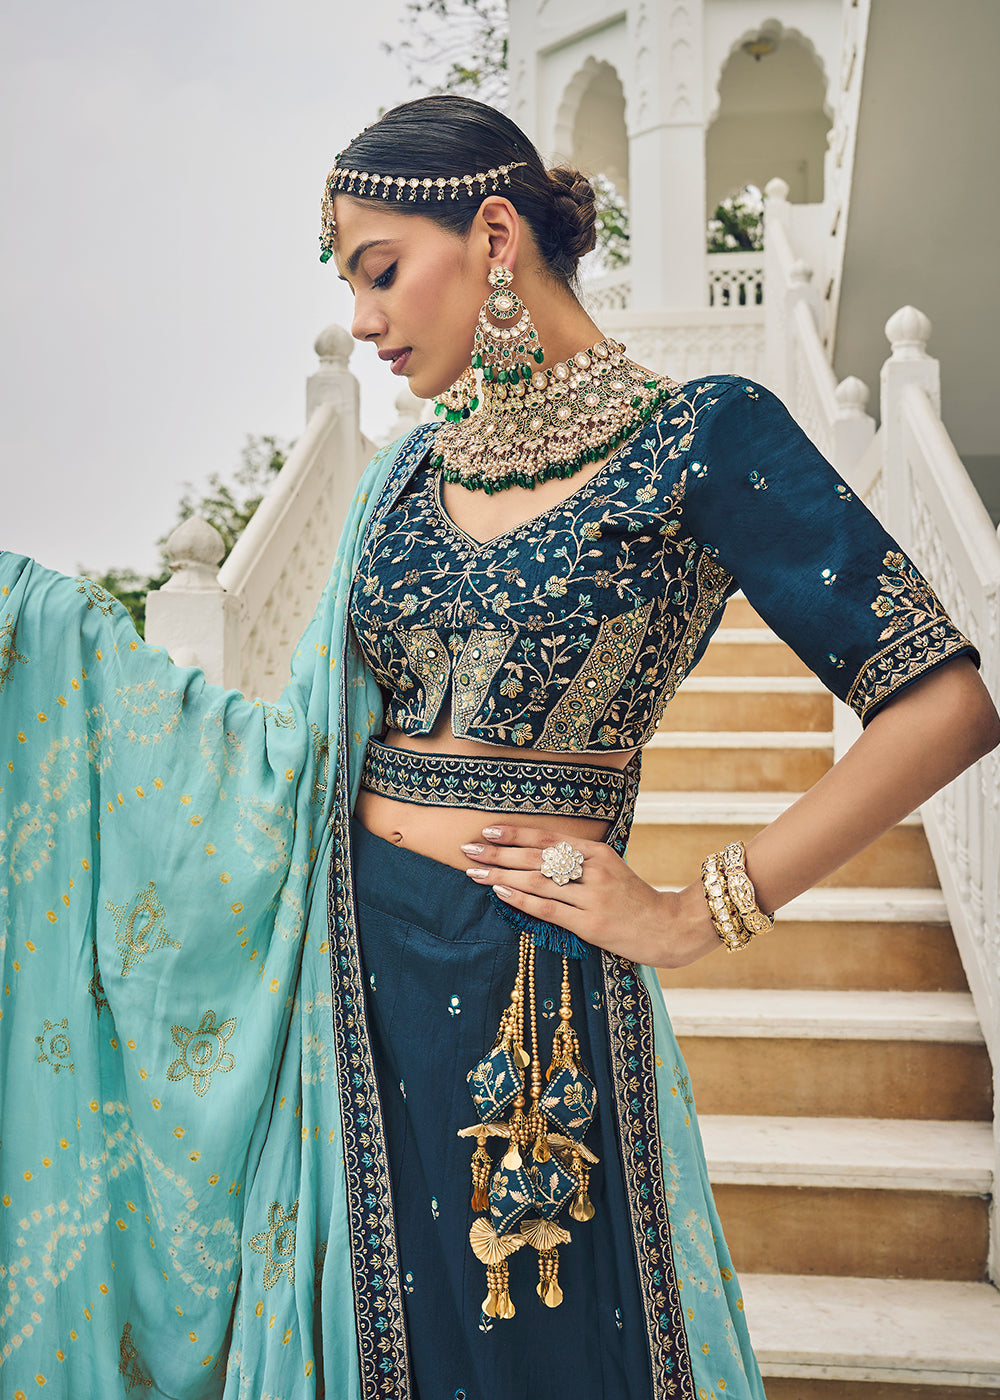 Buy Now Stunning Blue Viscose Silk Traditional Bridal Lehenga Choli Online in USA, UK, Canada & Worldwide at Empress Clothing.